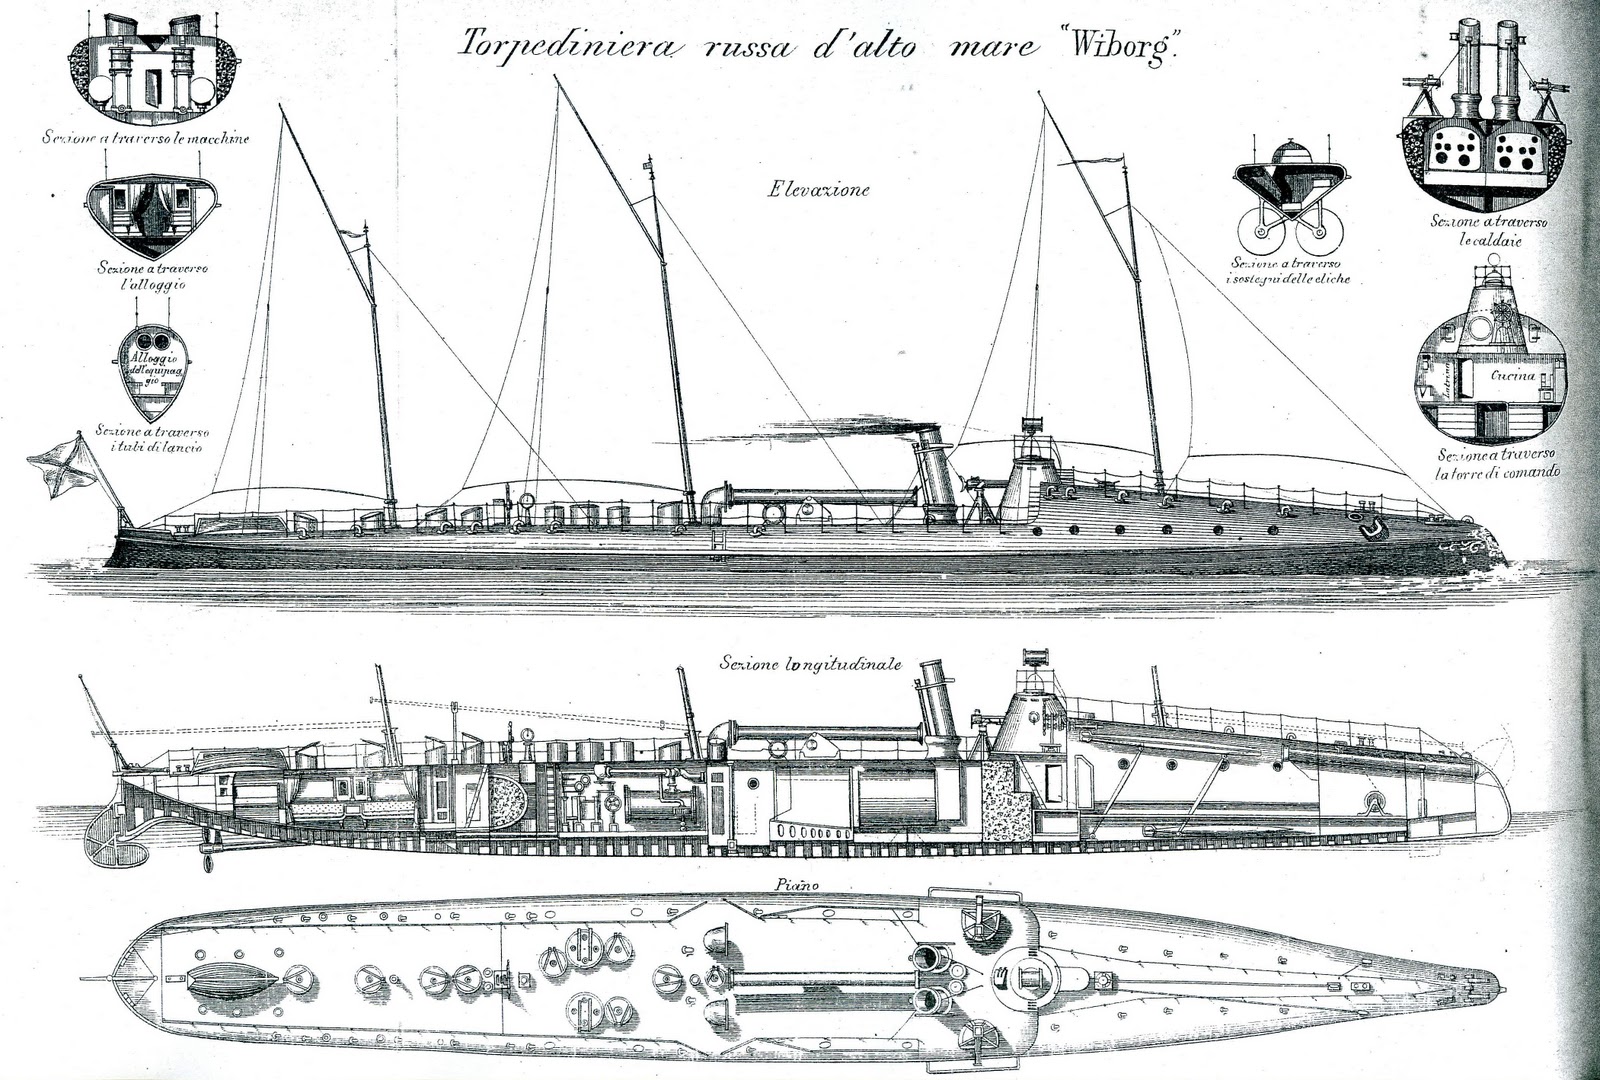 Planos_del_torpedero_de_alta_mar_WYBORG._De_la_RIVISTA_MARITTIMA._A_O_1886.jpg